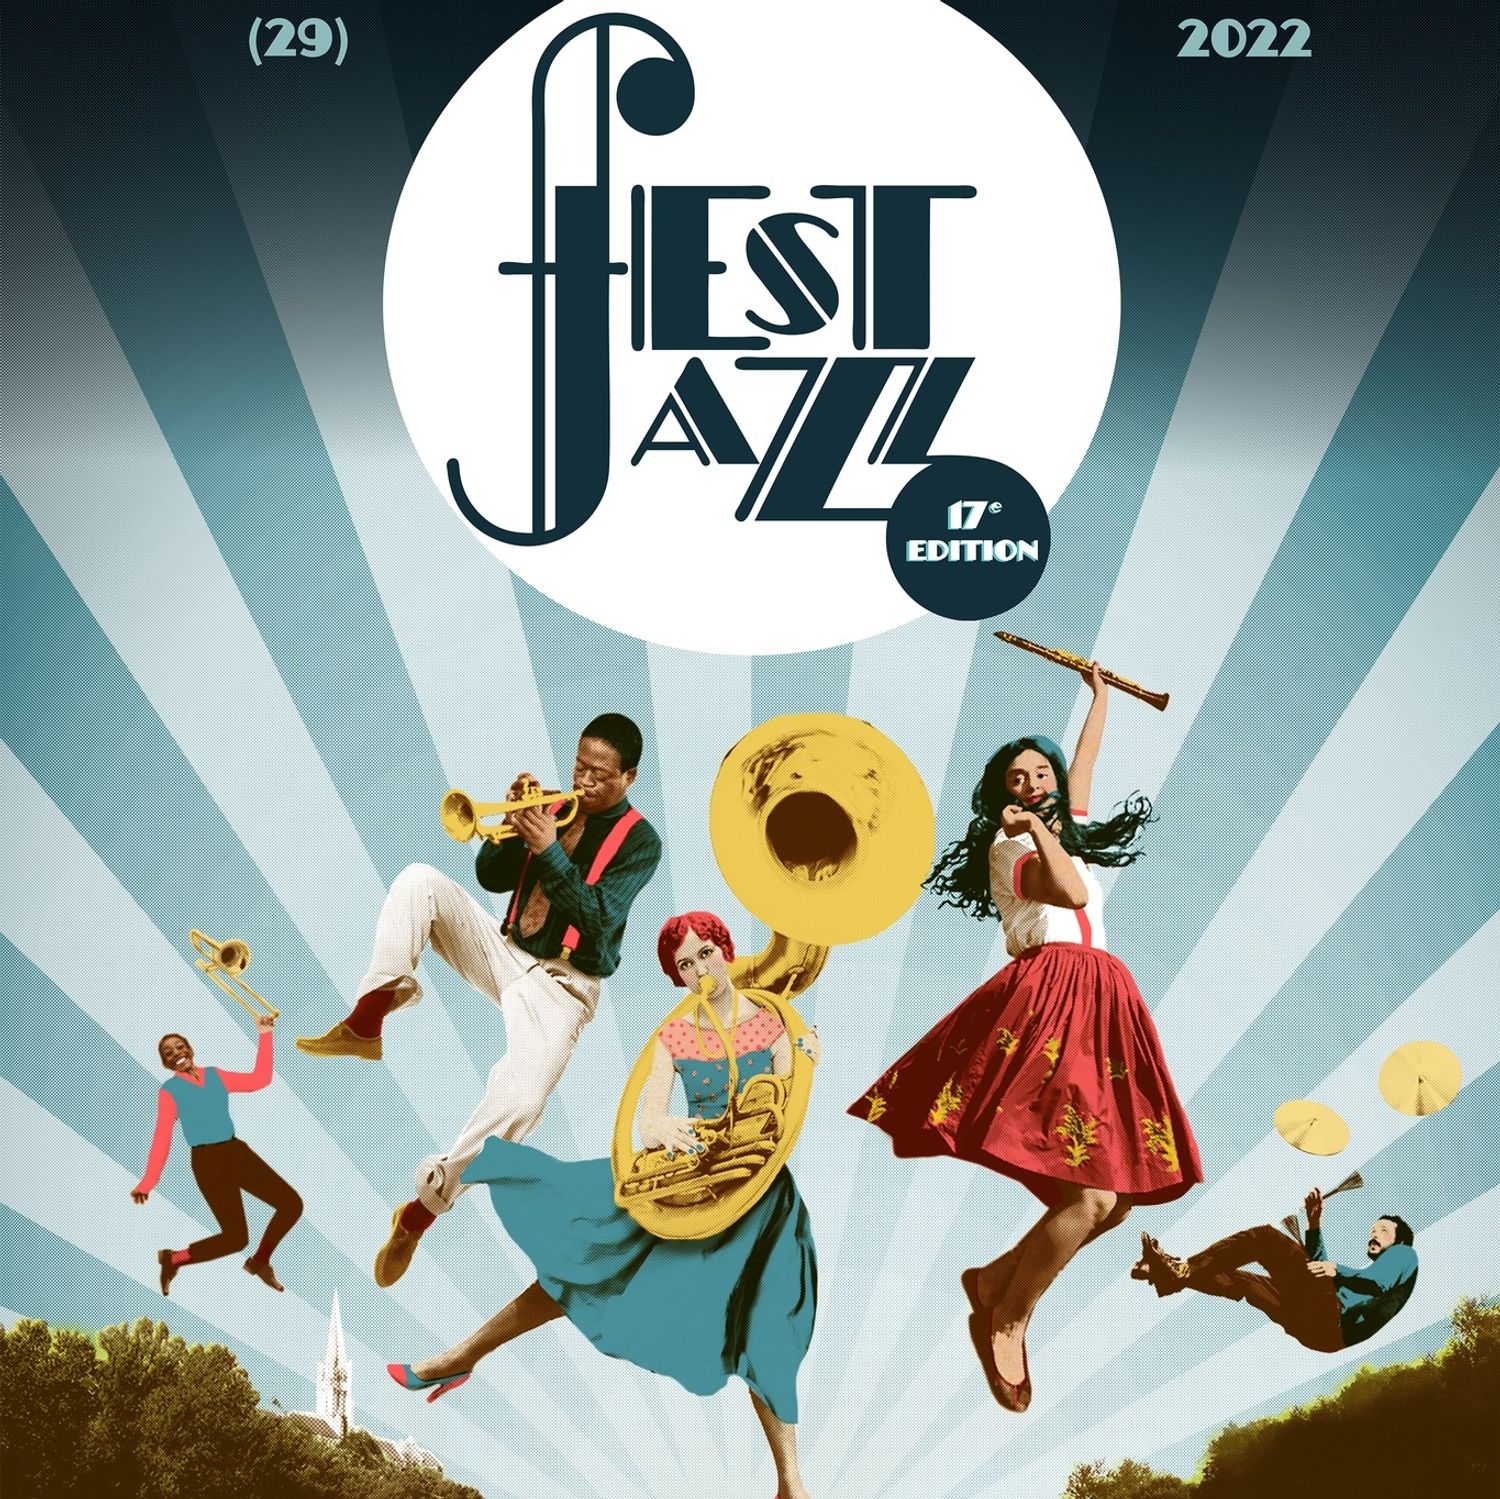 Fest Jazz 2022